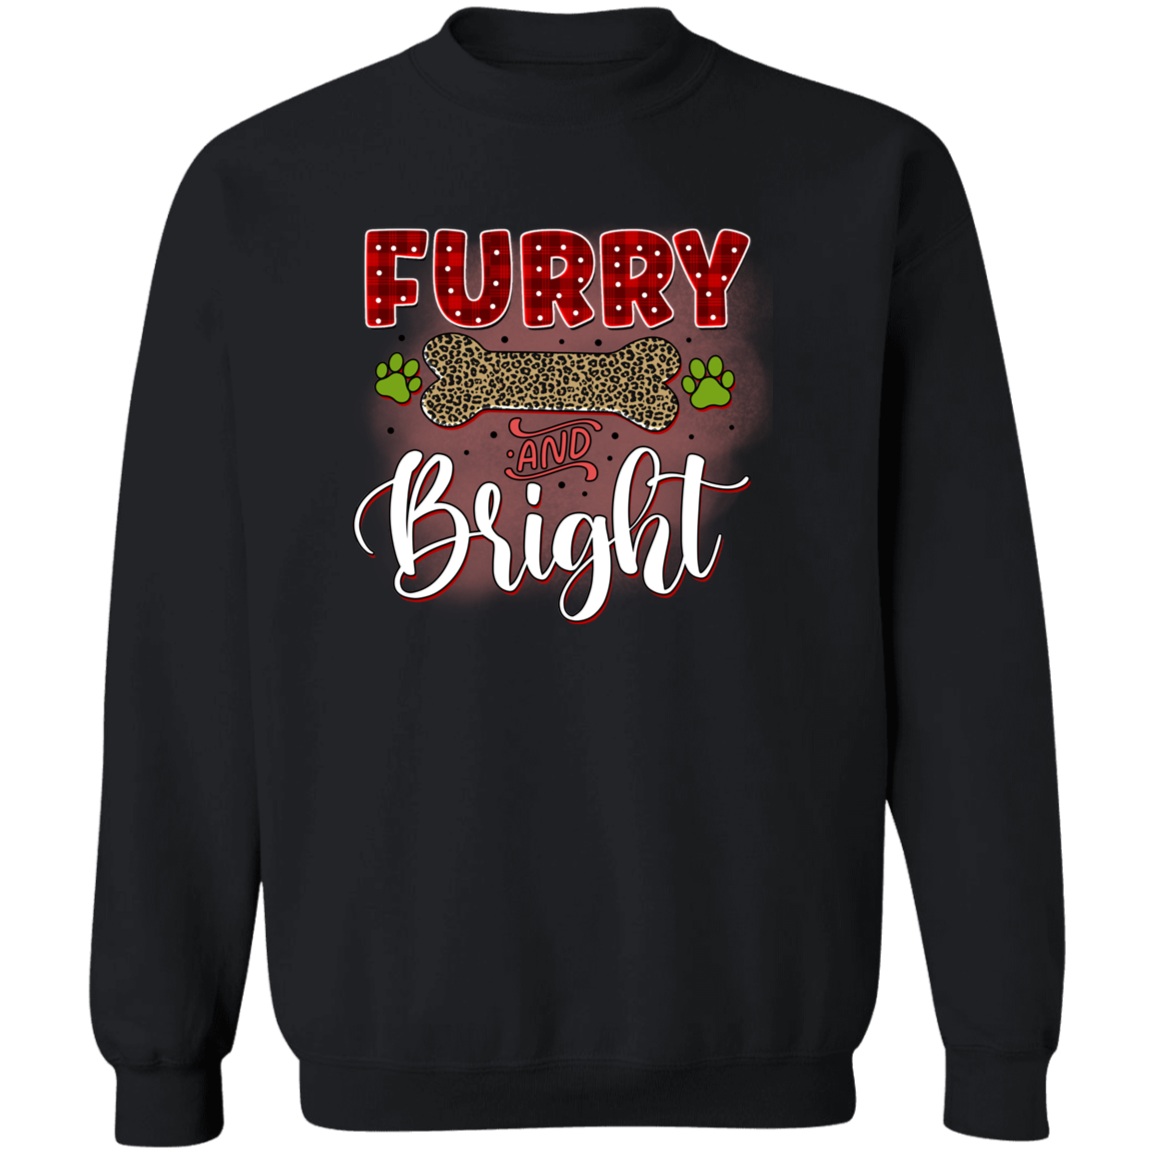 Furry & Bright Dog Christmas Crewneck Pullover Sweatshirt